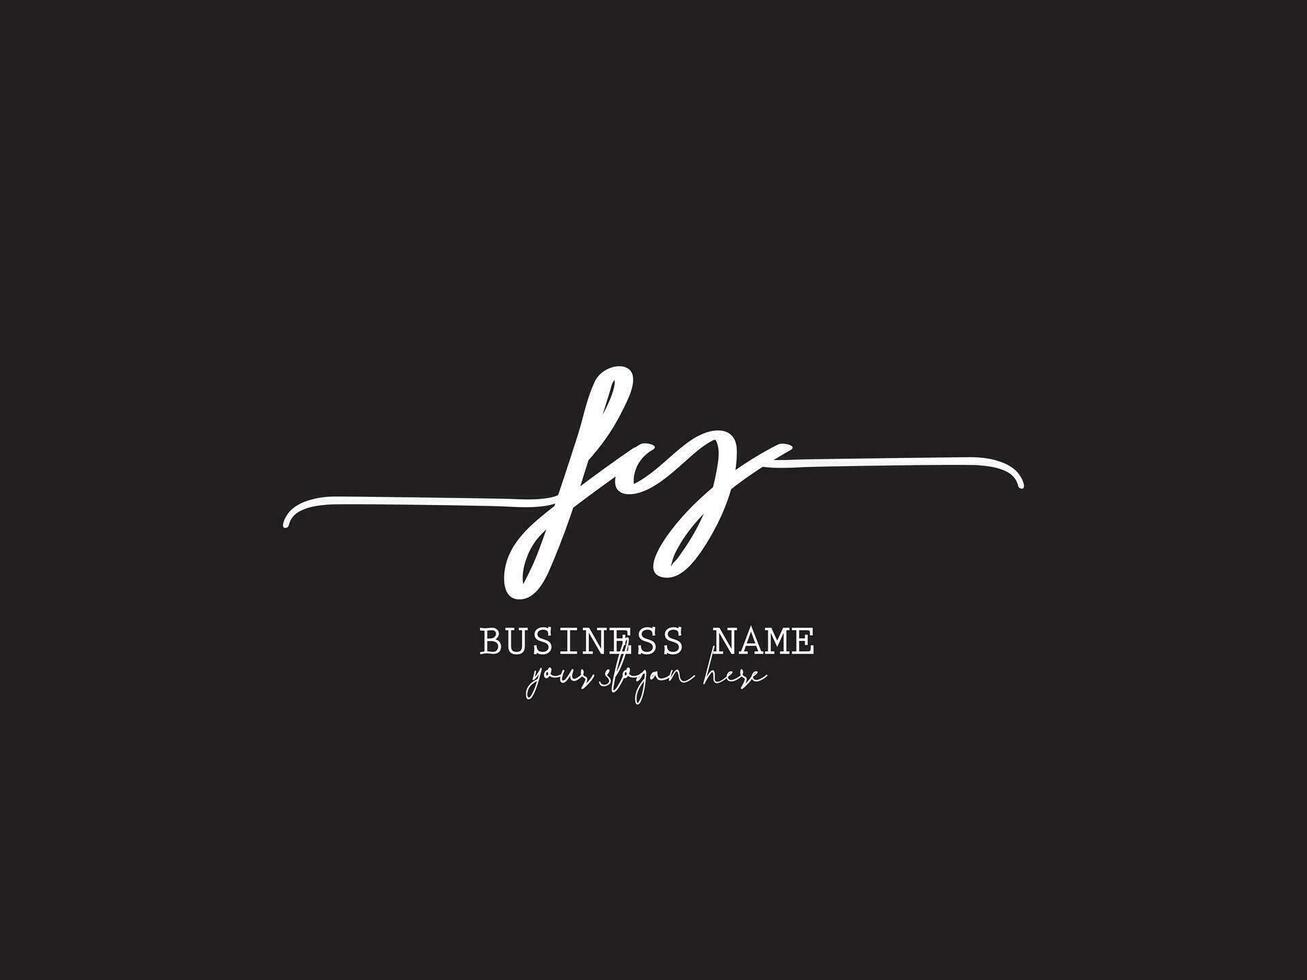 feminino tipografia fy logotipo marca, luxo fy assinatura carta logotipo para seu floral fazer compras vetor